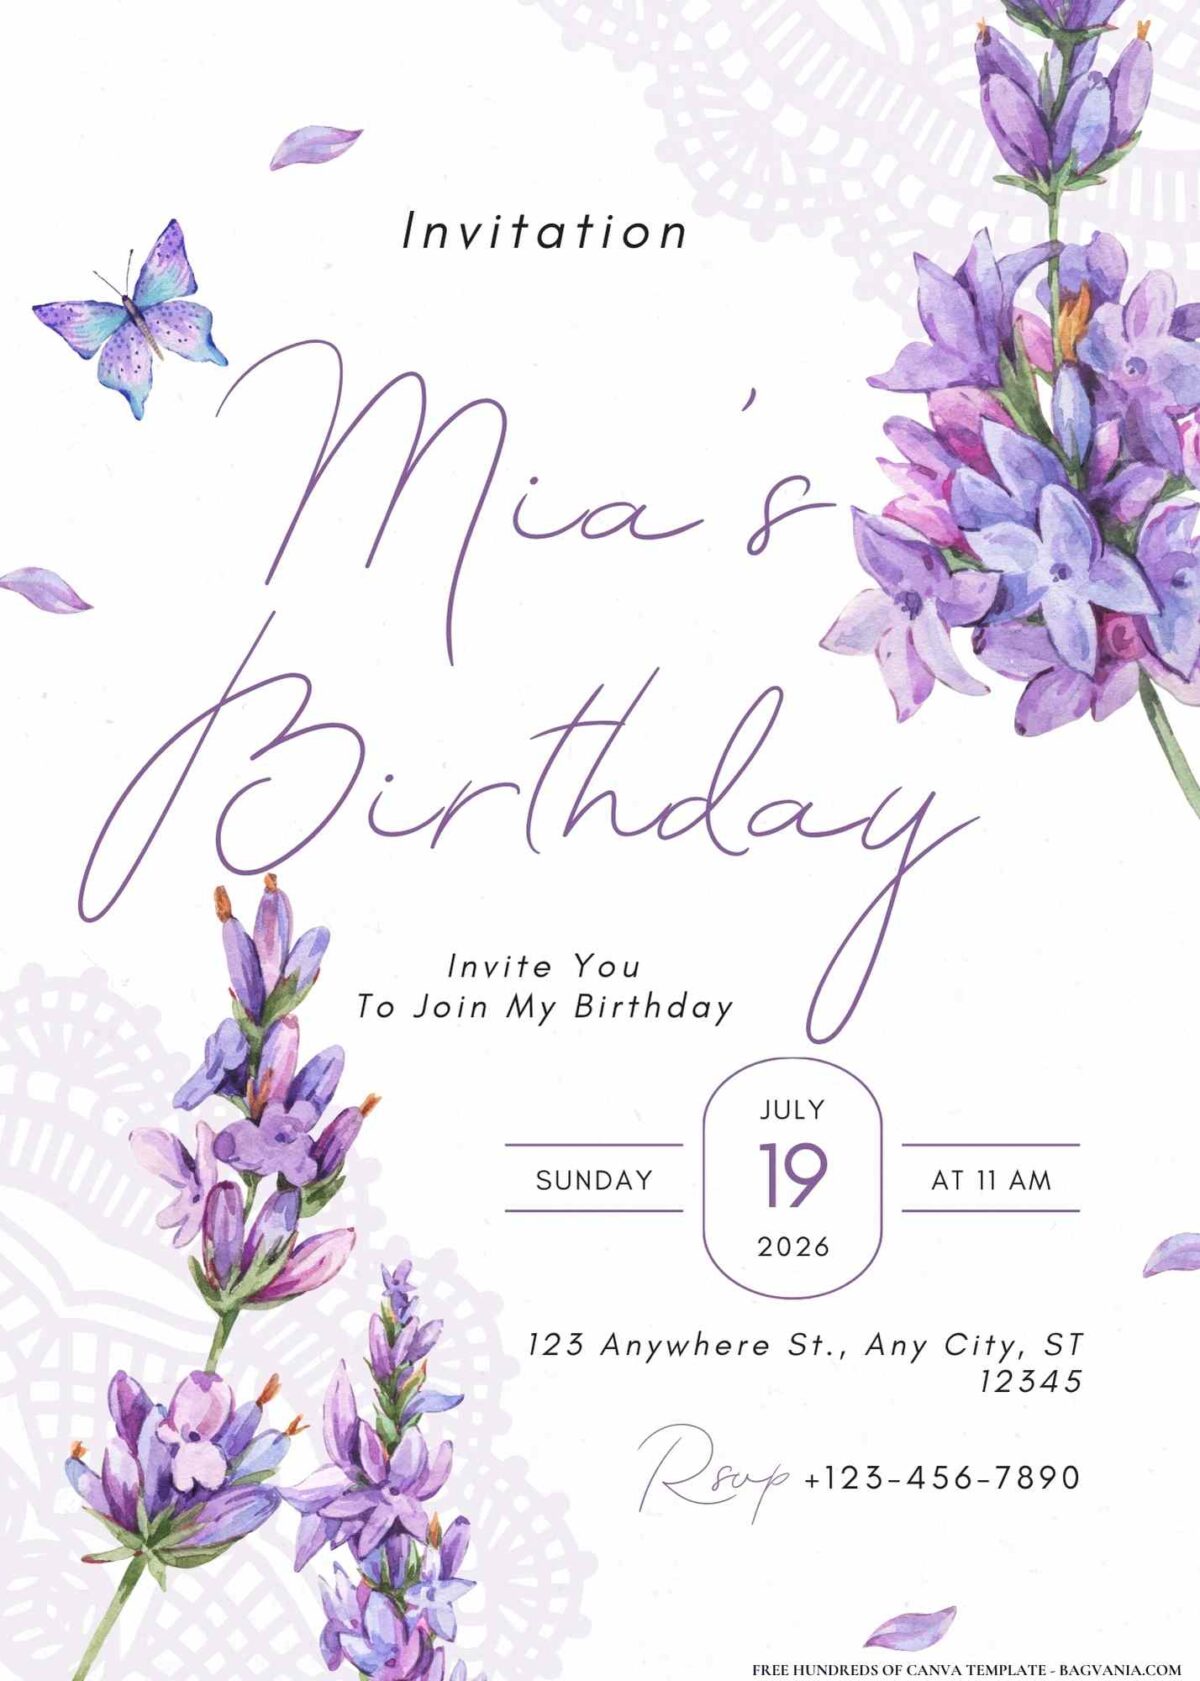 FREE Editable Lavender Lace Doily Birthday Invitation